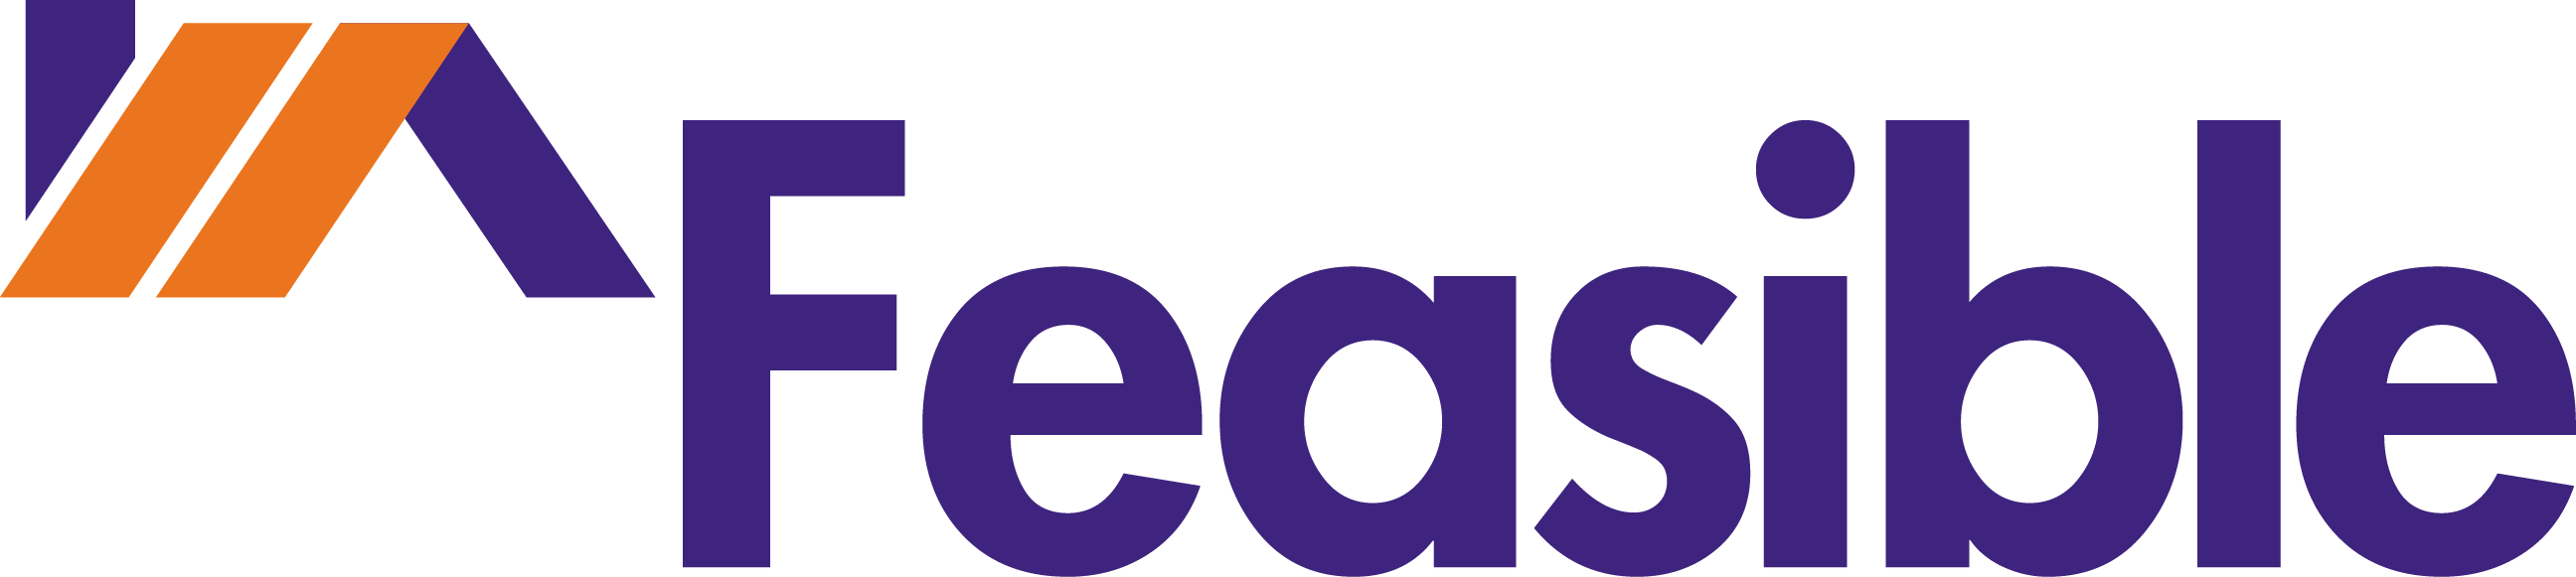 Feasible_logo